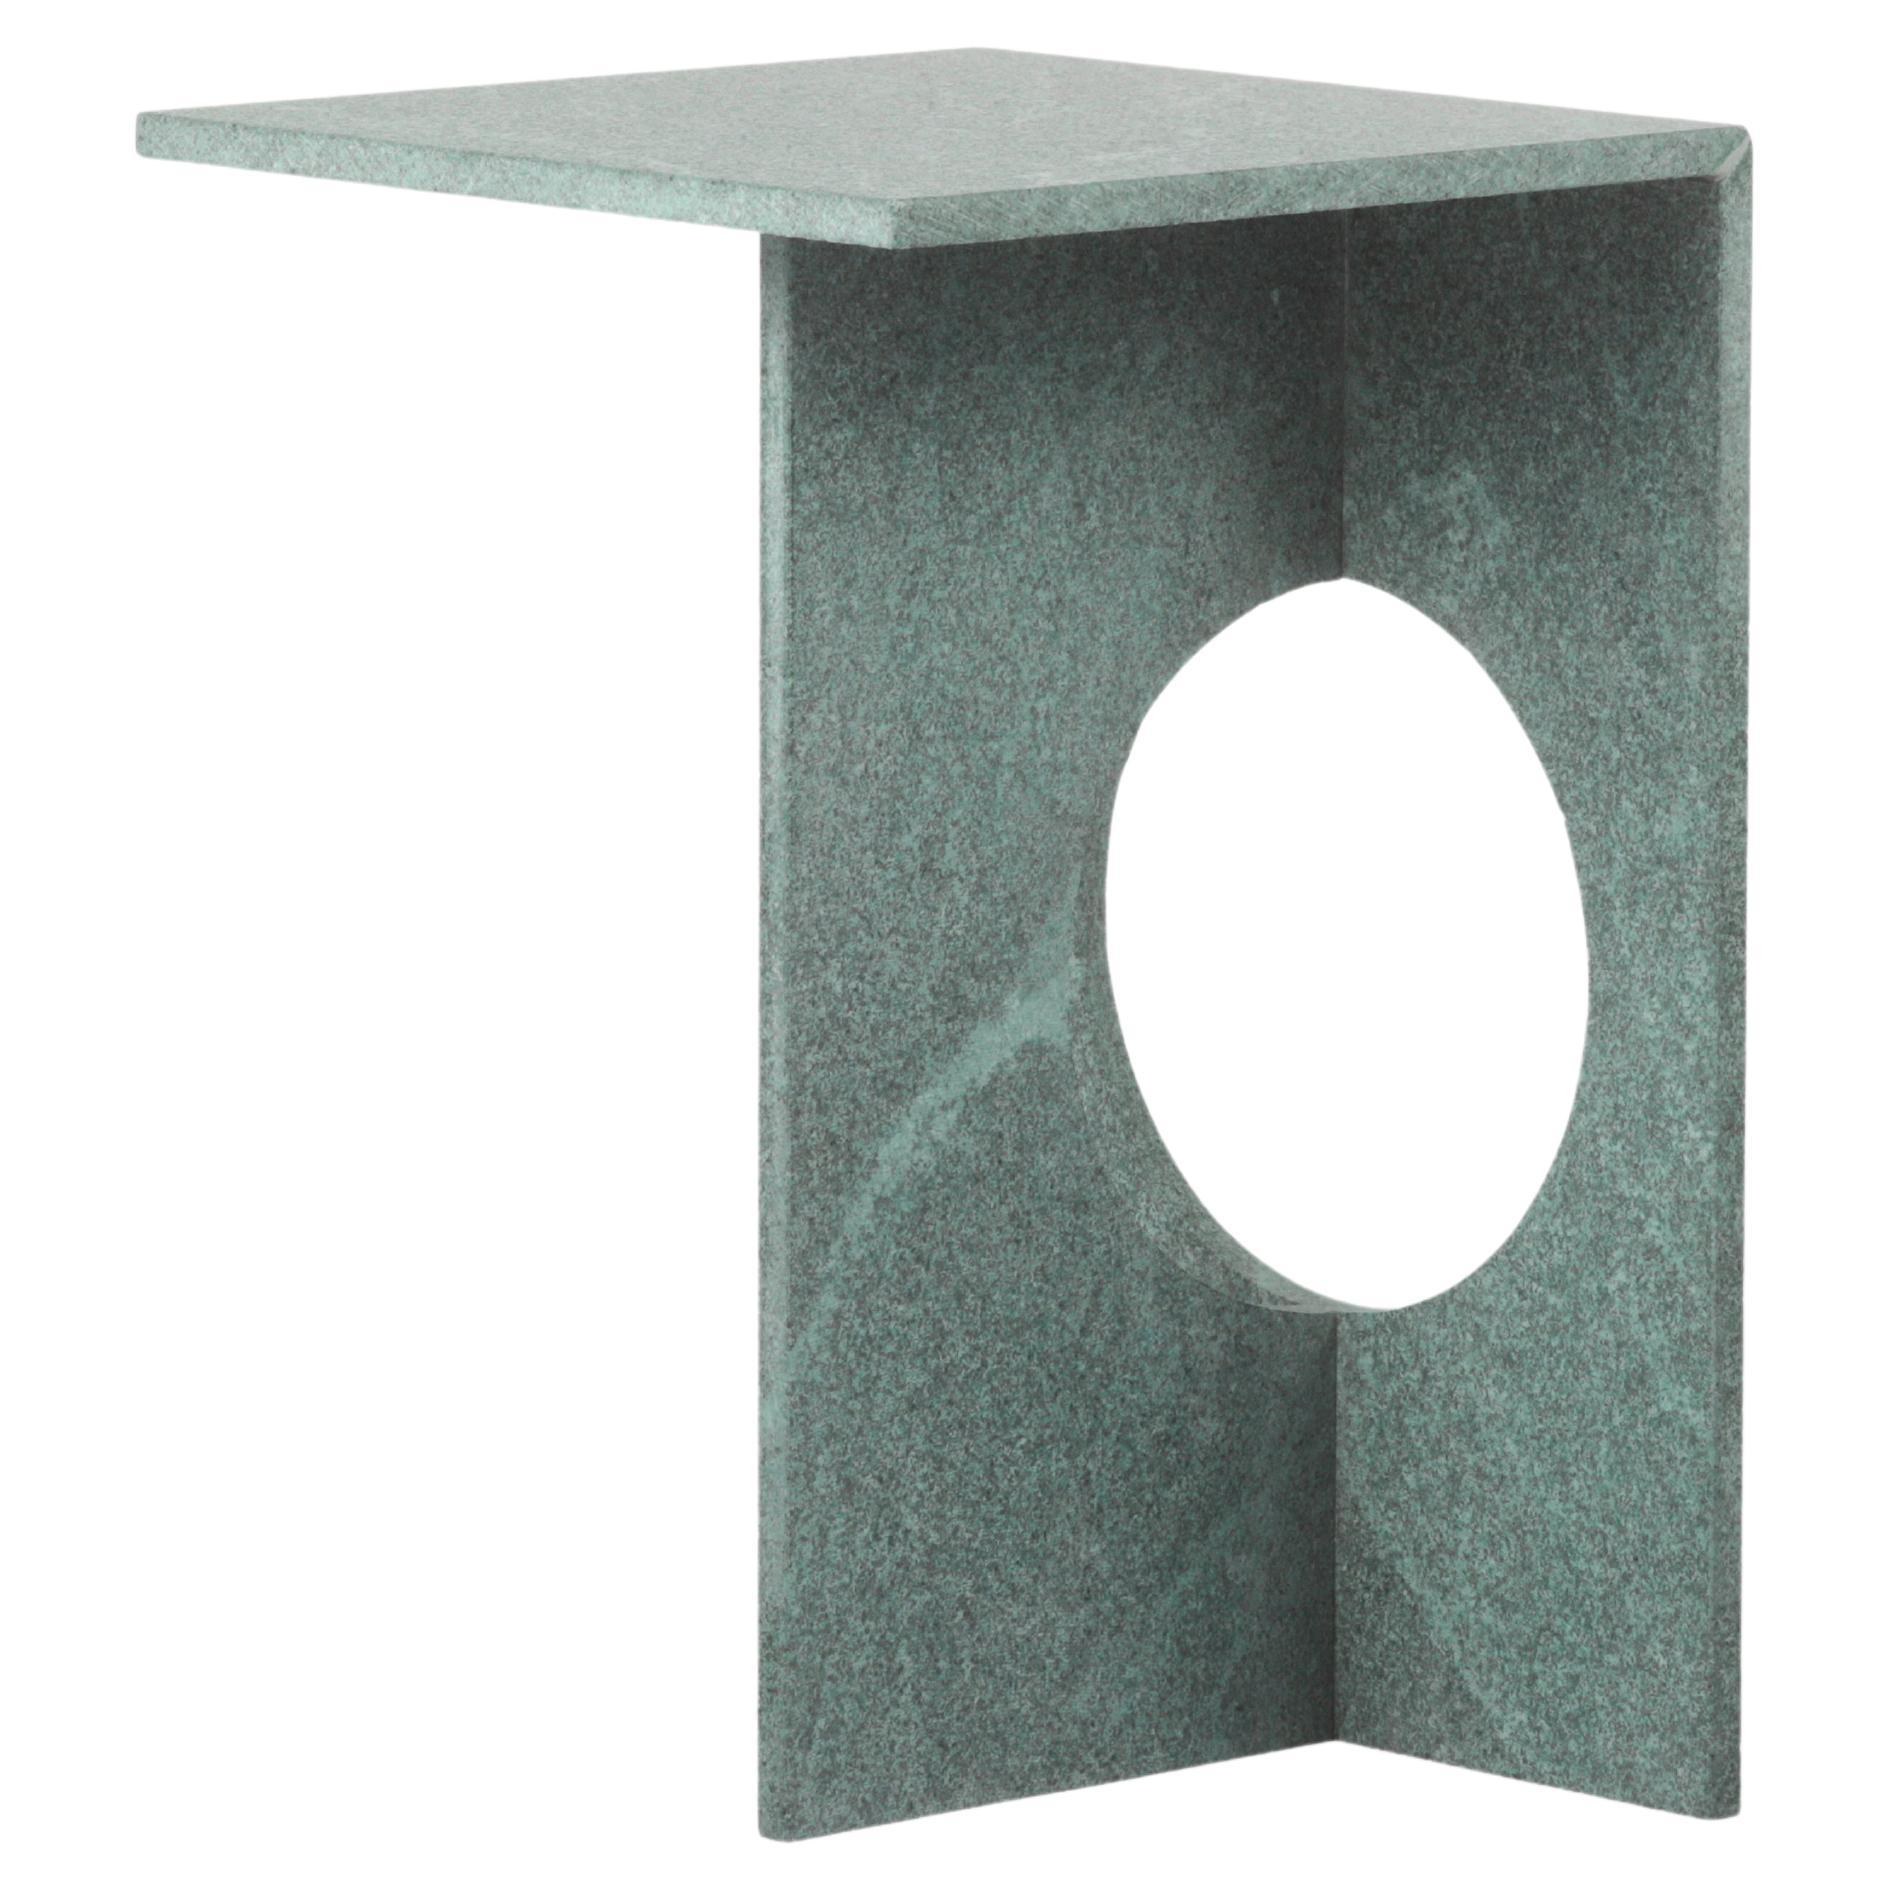 Ola Side Table, Sandblasted Green Diabase Stone, Studio Mohs